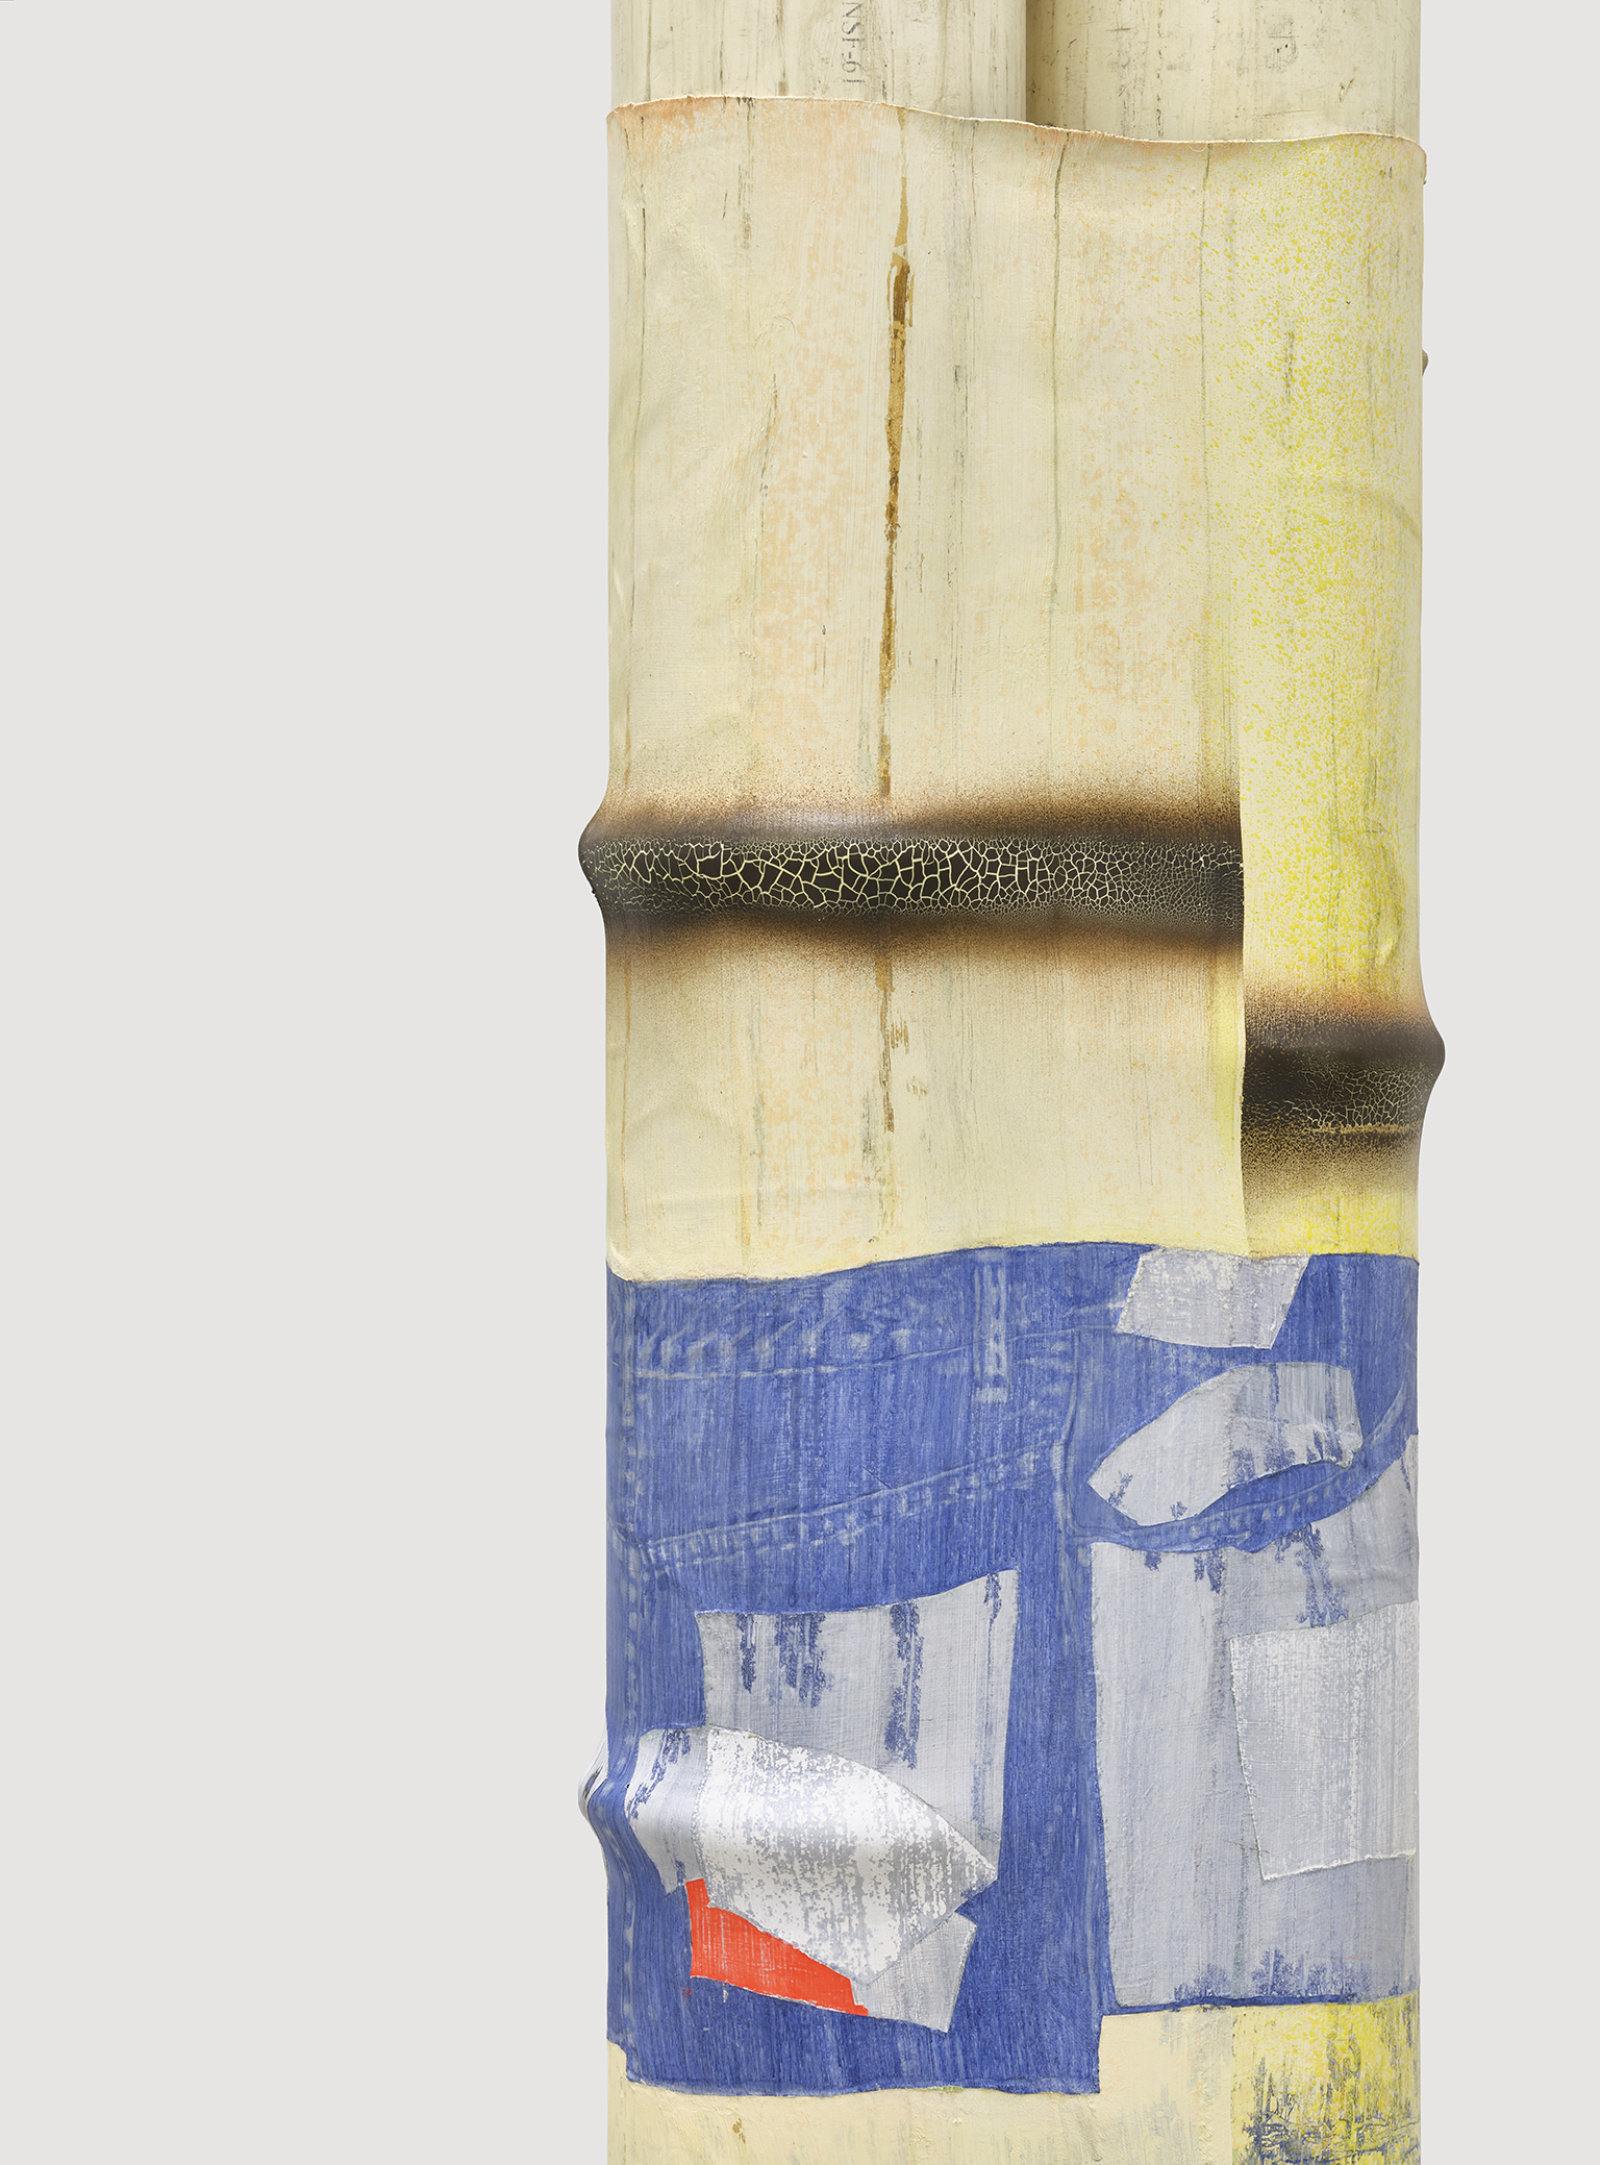 Valérie Blass, L’homme augmenté (detail), 2019, pvc pipe, heat-shrink tubing, acrylic paint, 117 x 15 x 12 in. (296 x 38 x 24 cm)